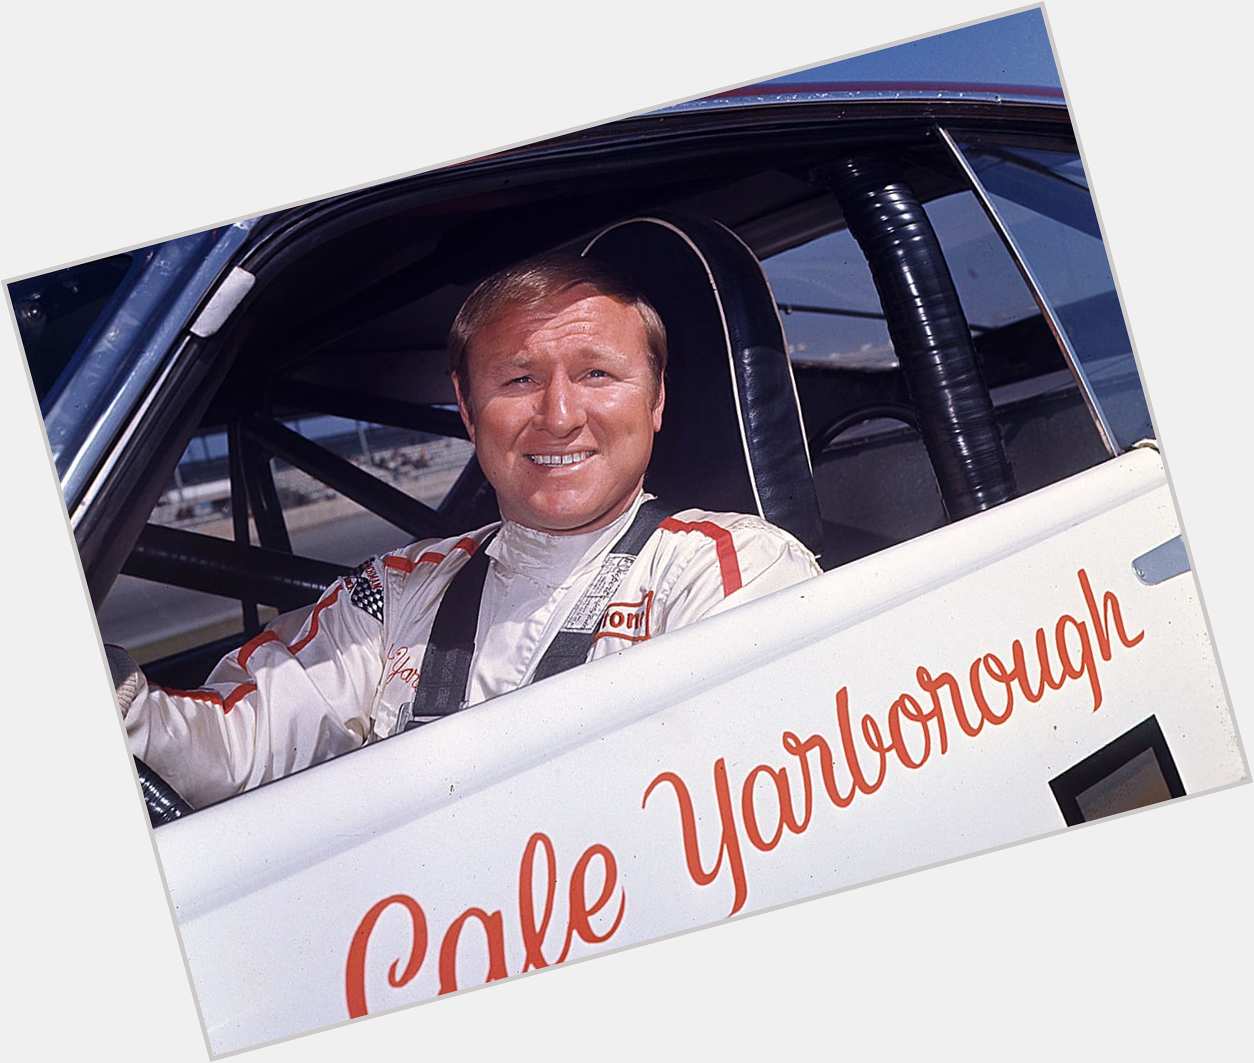 Happy birthday to NASCAR HOFer Cale Yarborough 